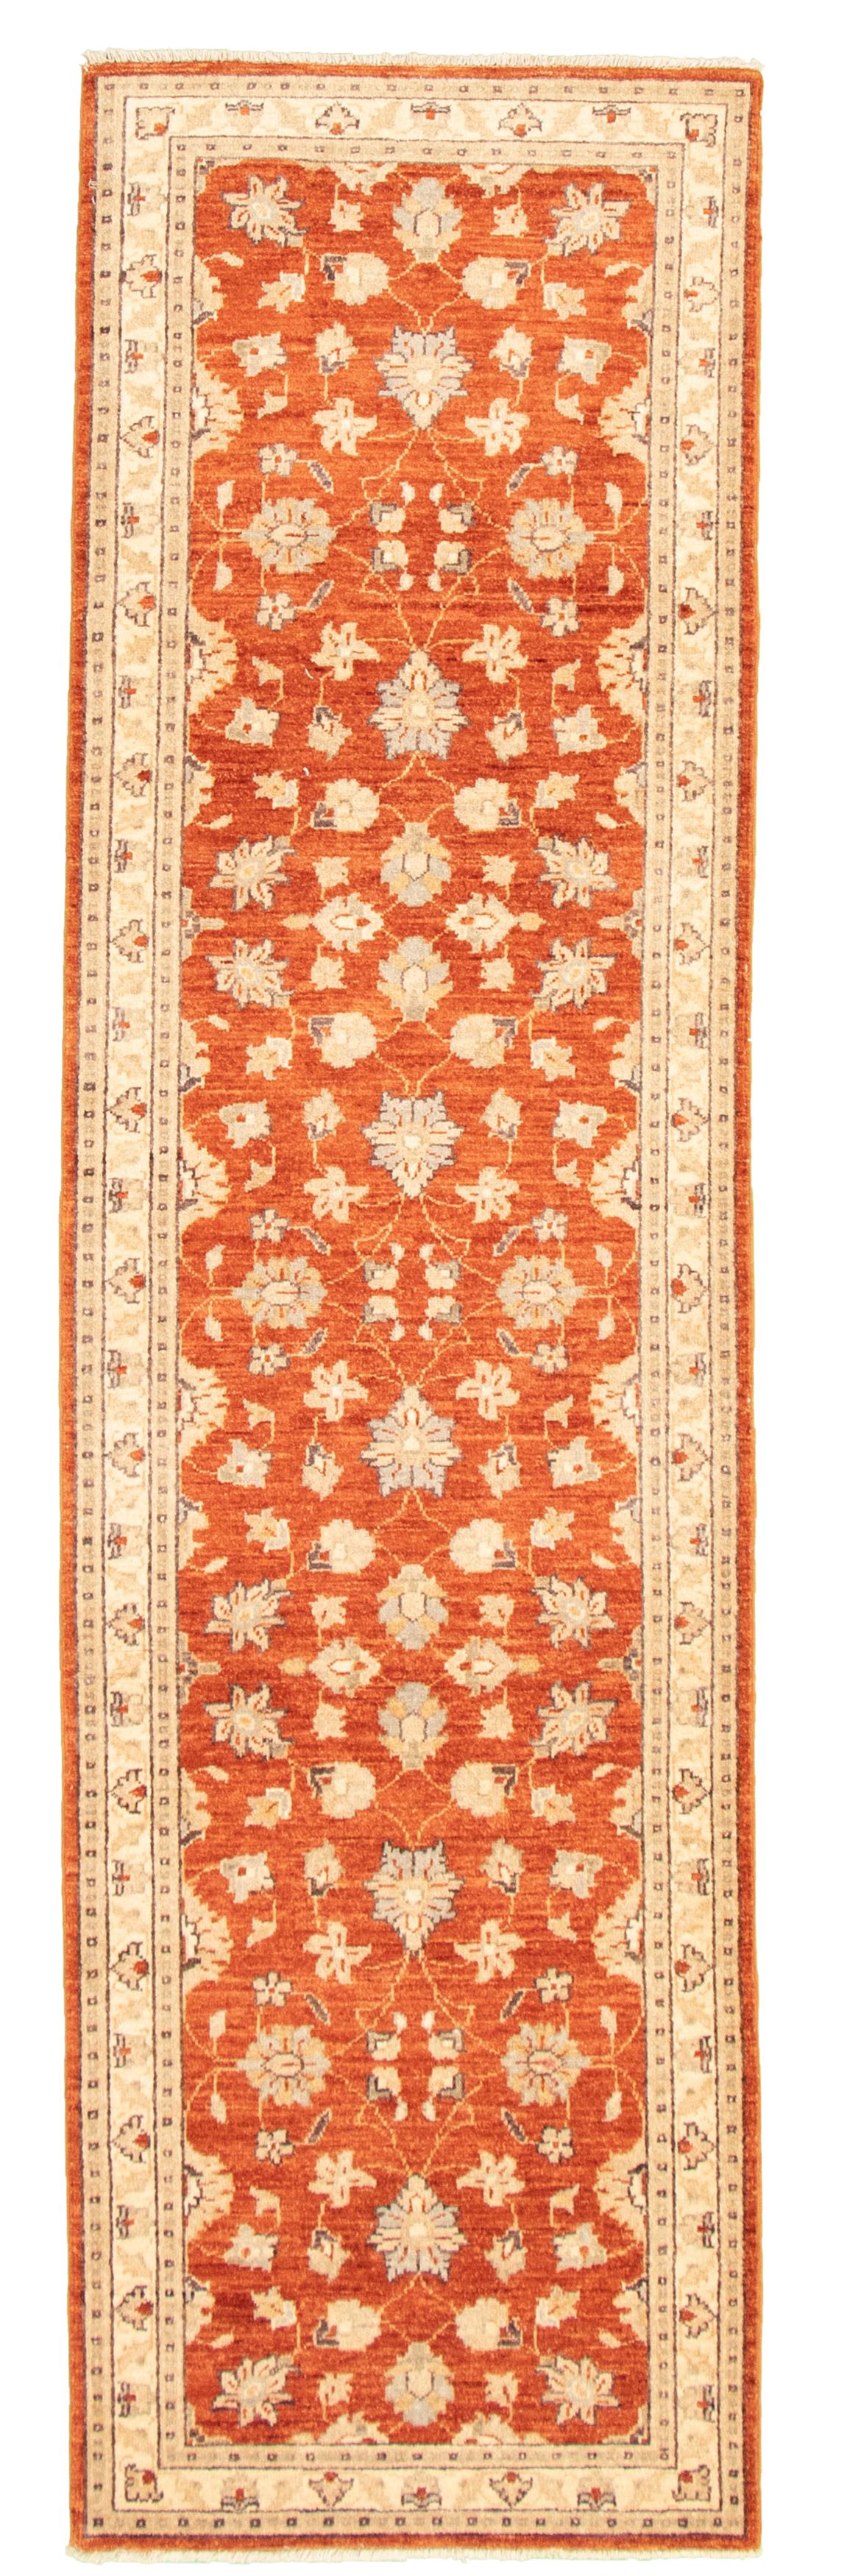 Hand-knotted Peshawar Oushak Dark Copper Wool Rug 2'7" x 9'10" Size: 2'7" x 9'10"  